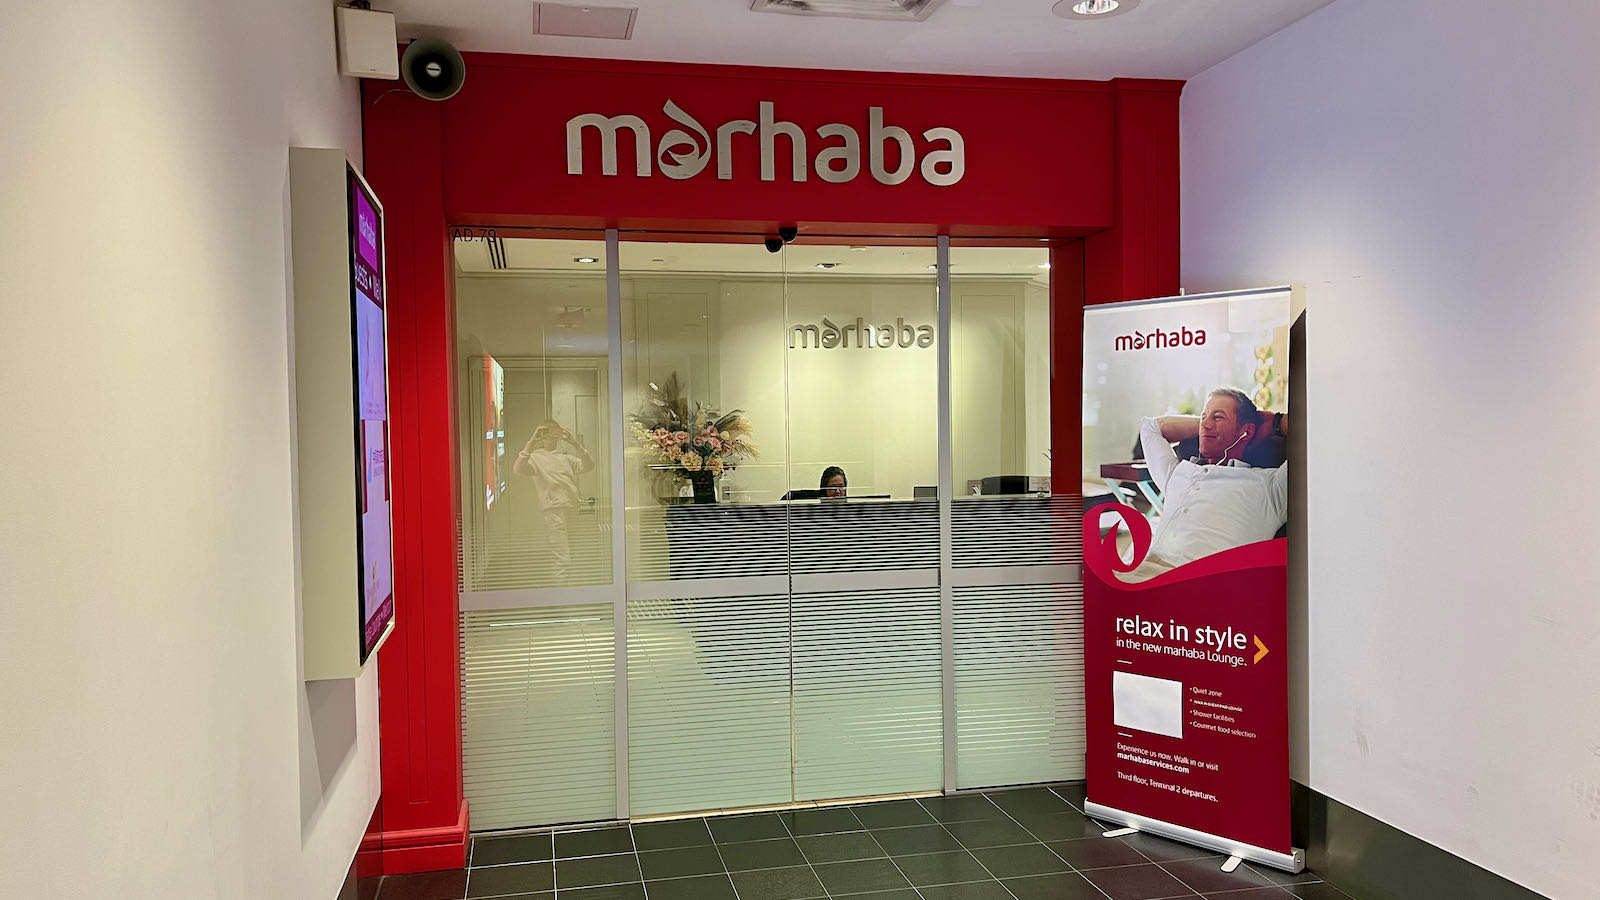 Qatar Airways passengers use Maharba Lounge Melbourne